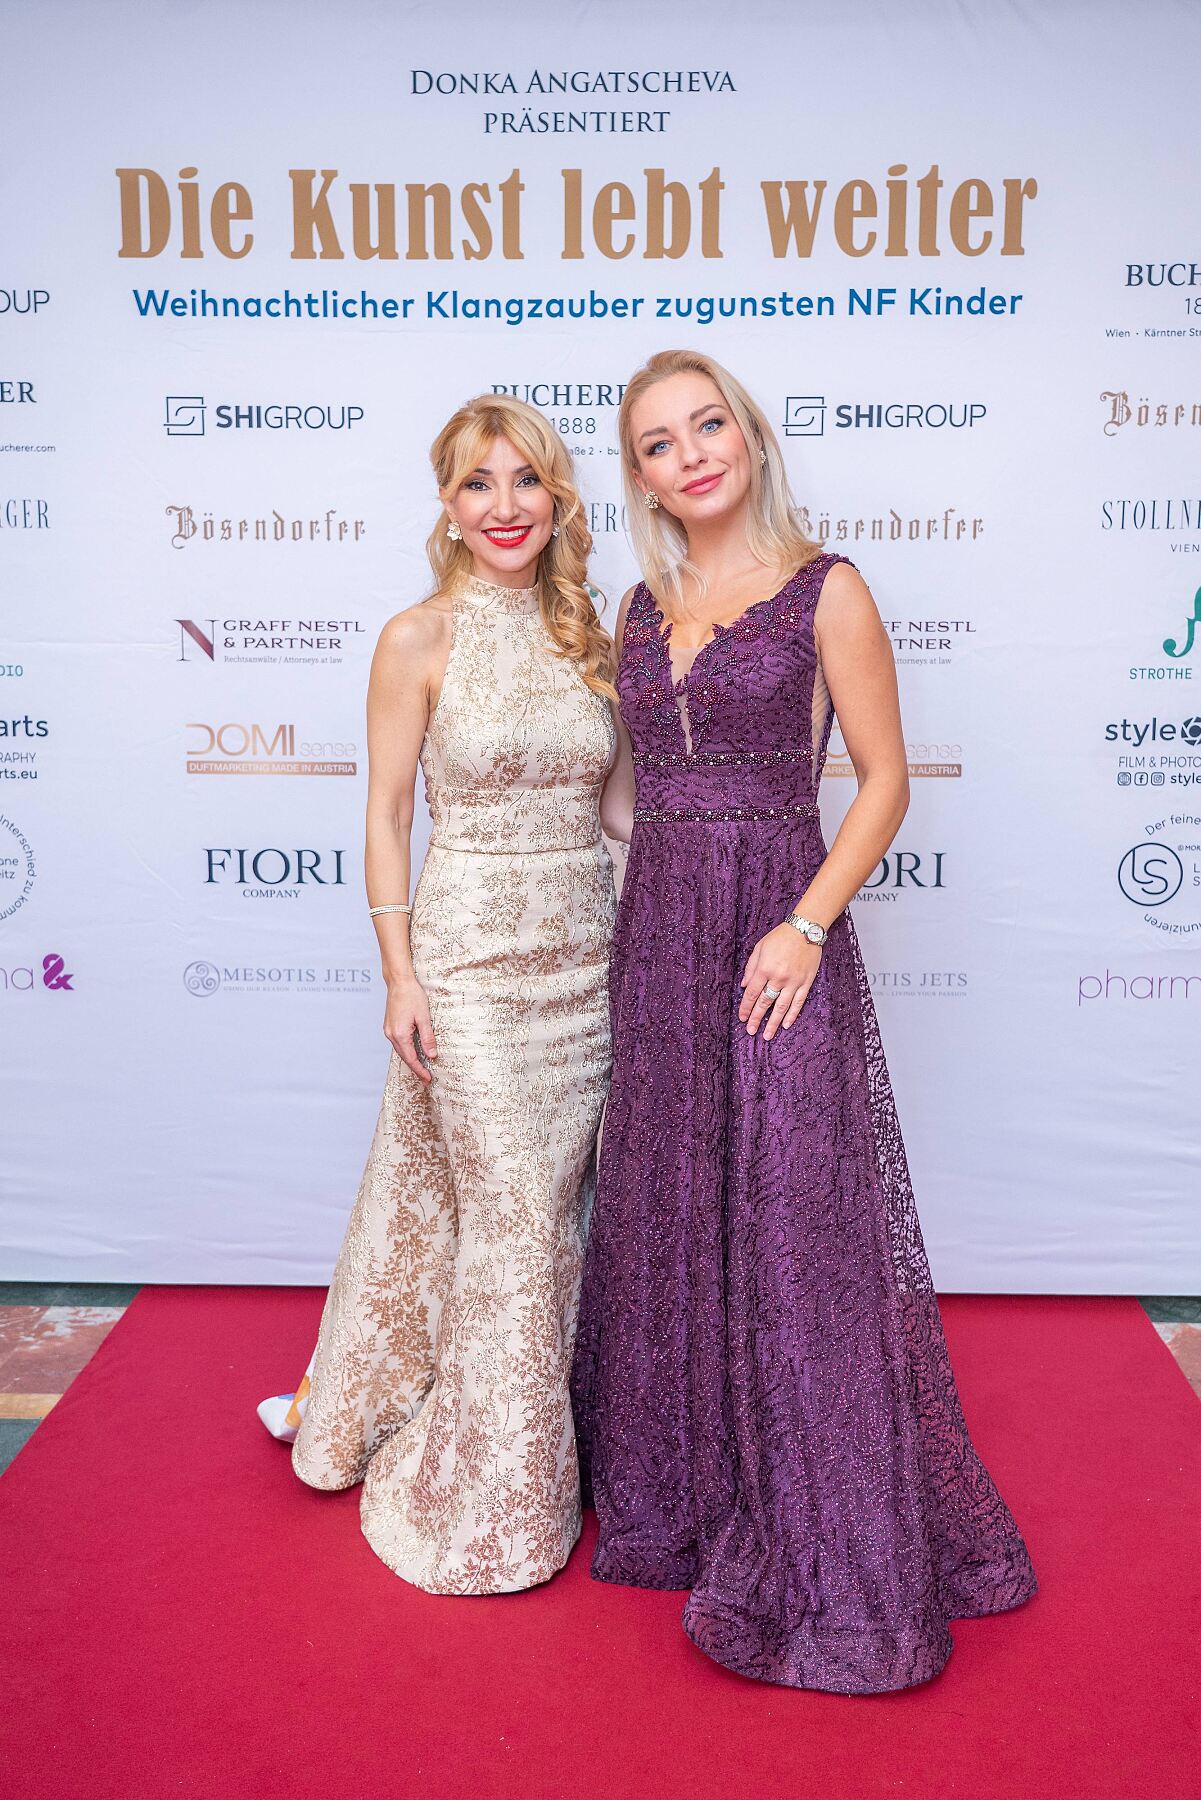 Donka Angatscheva und Lidia Baich